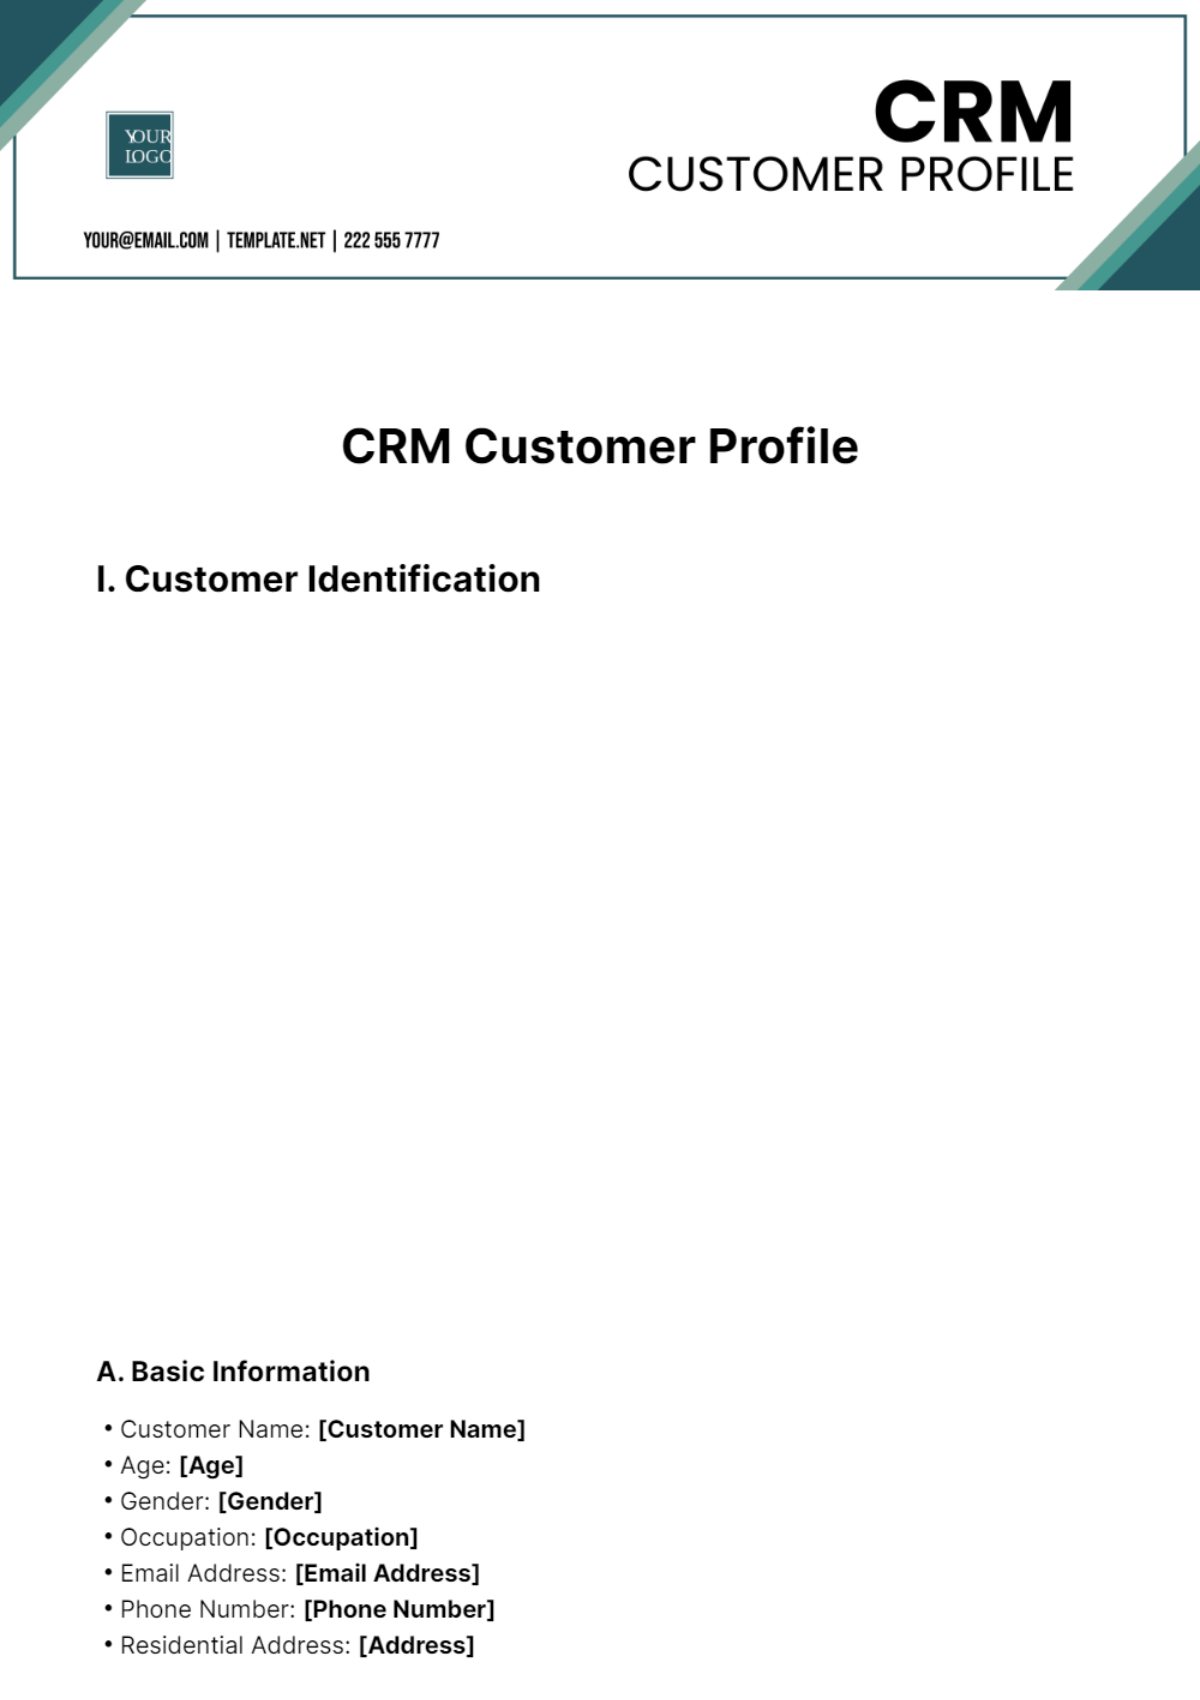 CRM Customer Profile Template